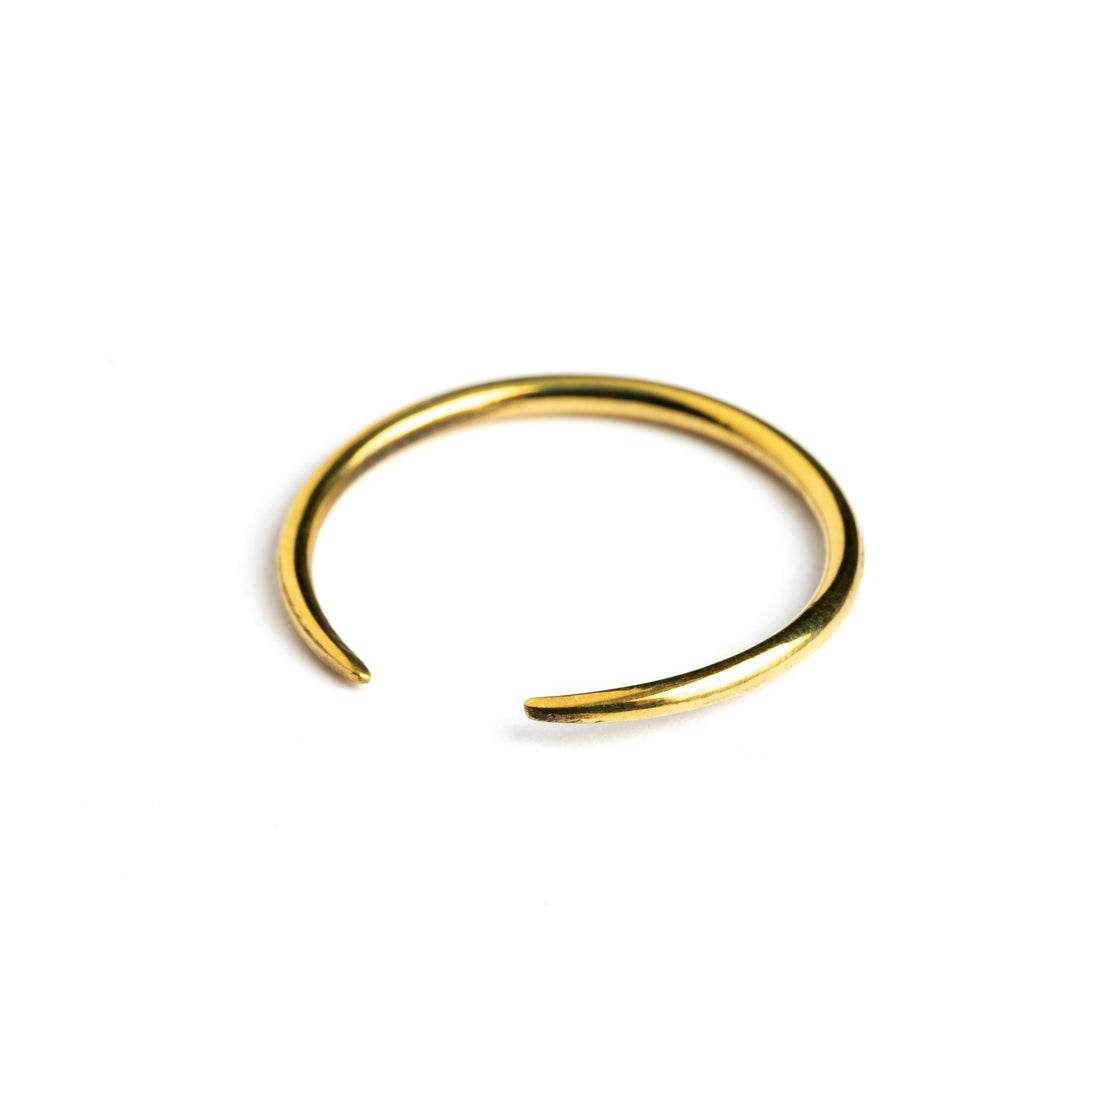 single golden brass wire horseshoe earring right side view